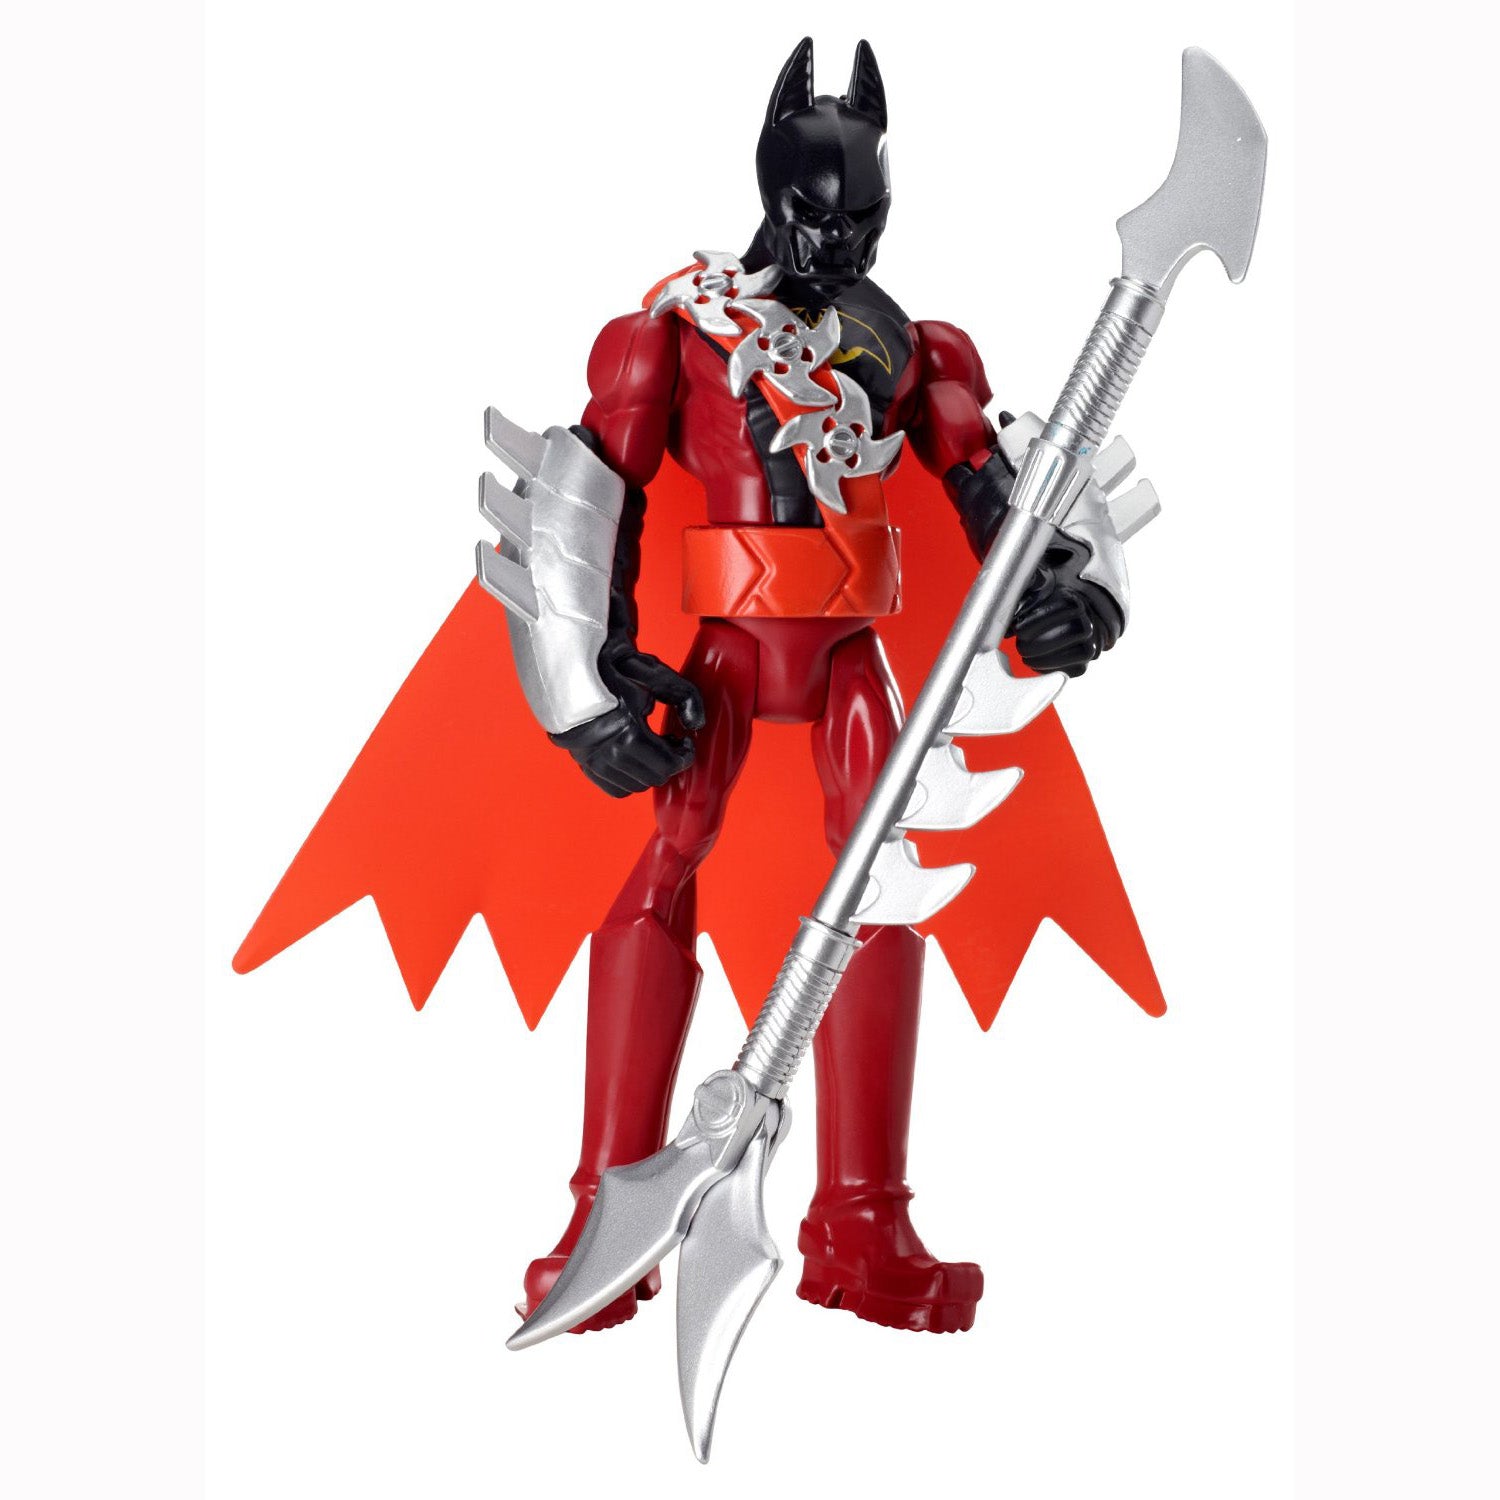 Batman Toys - Power Attack Ninja Attack Batman